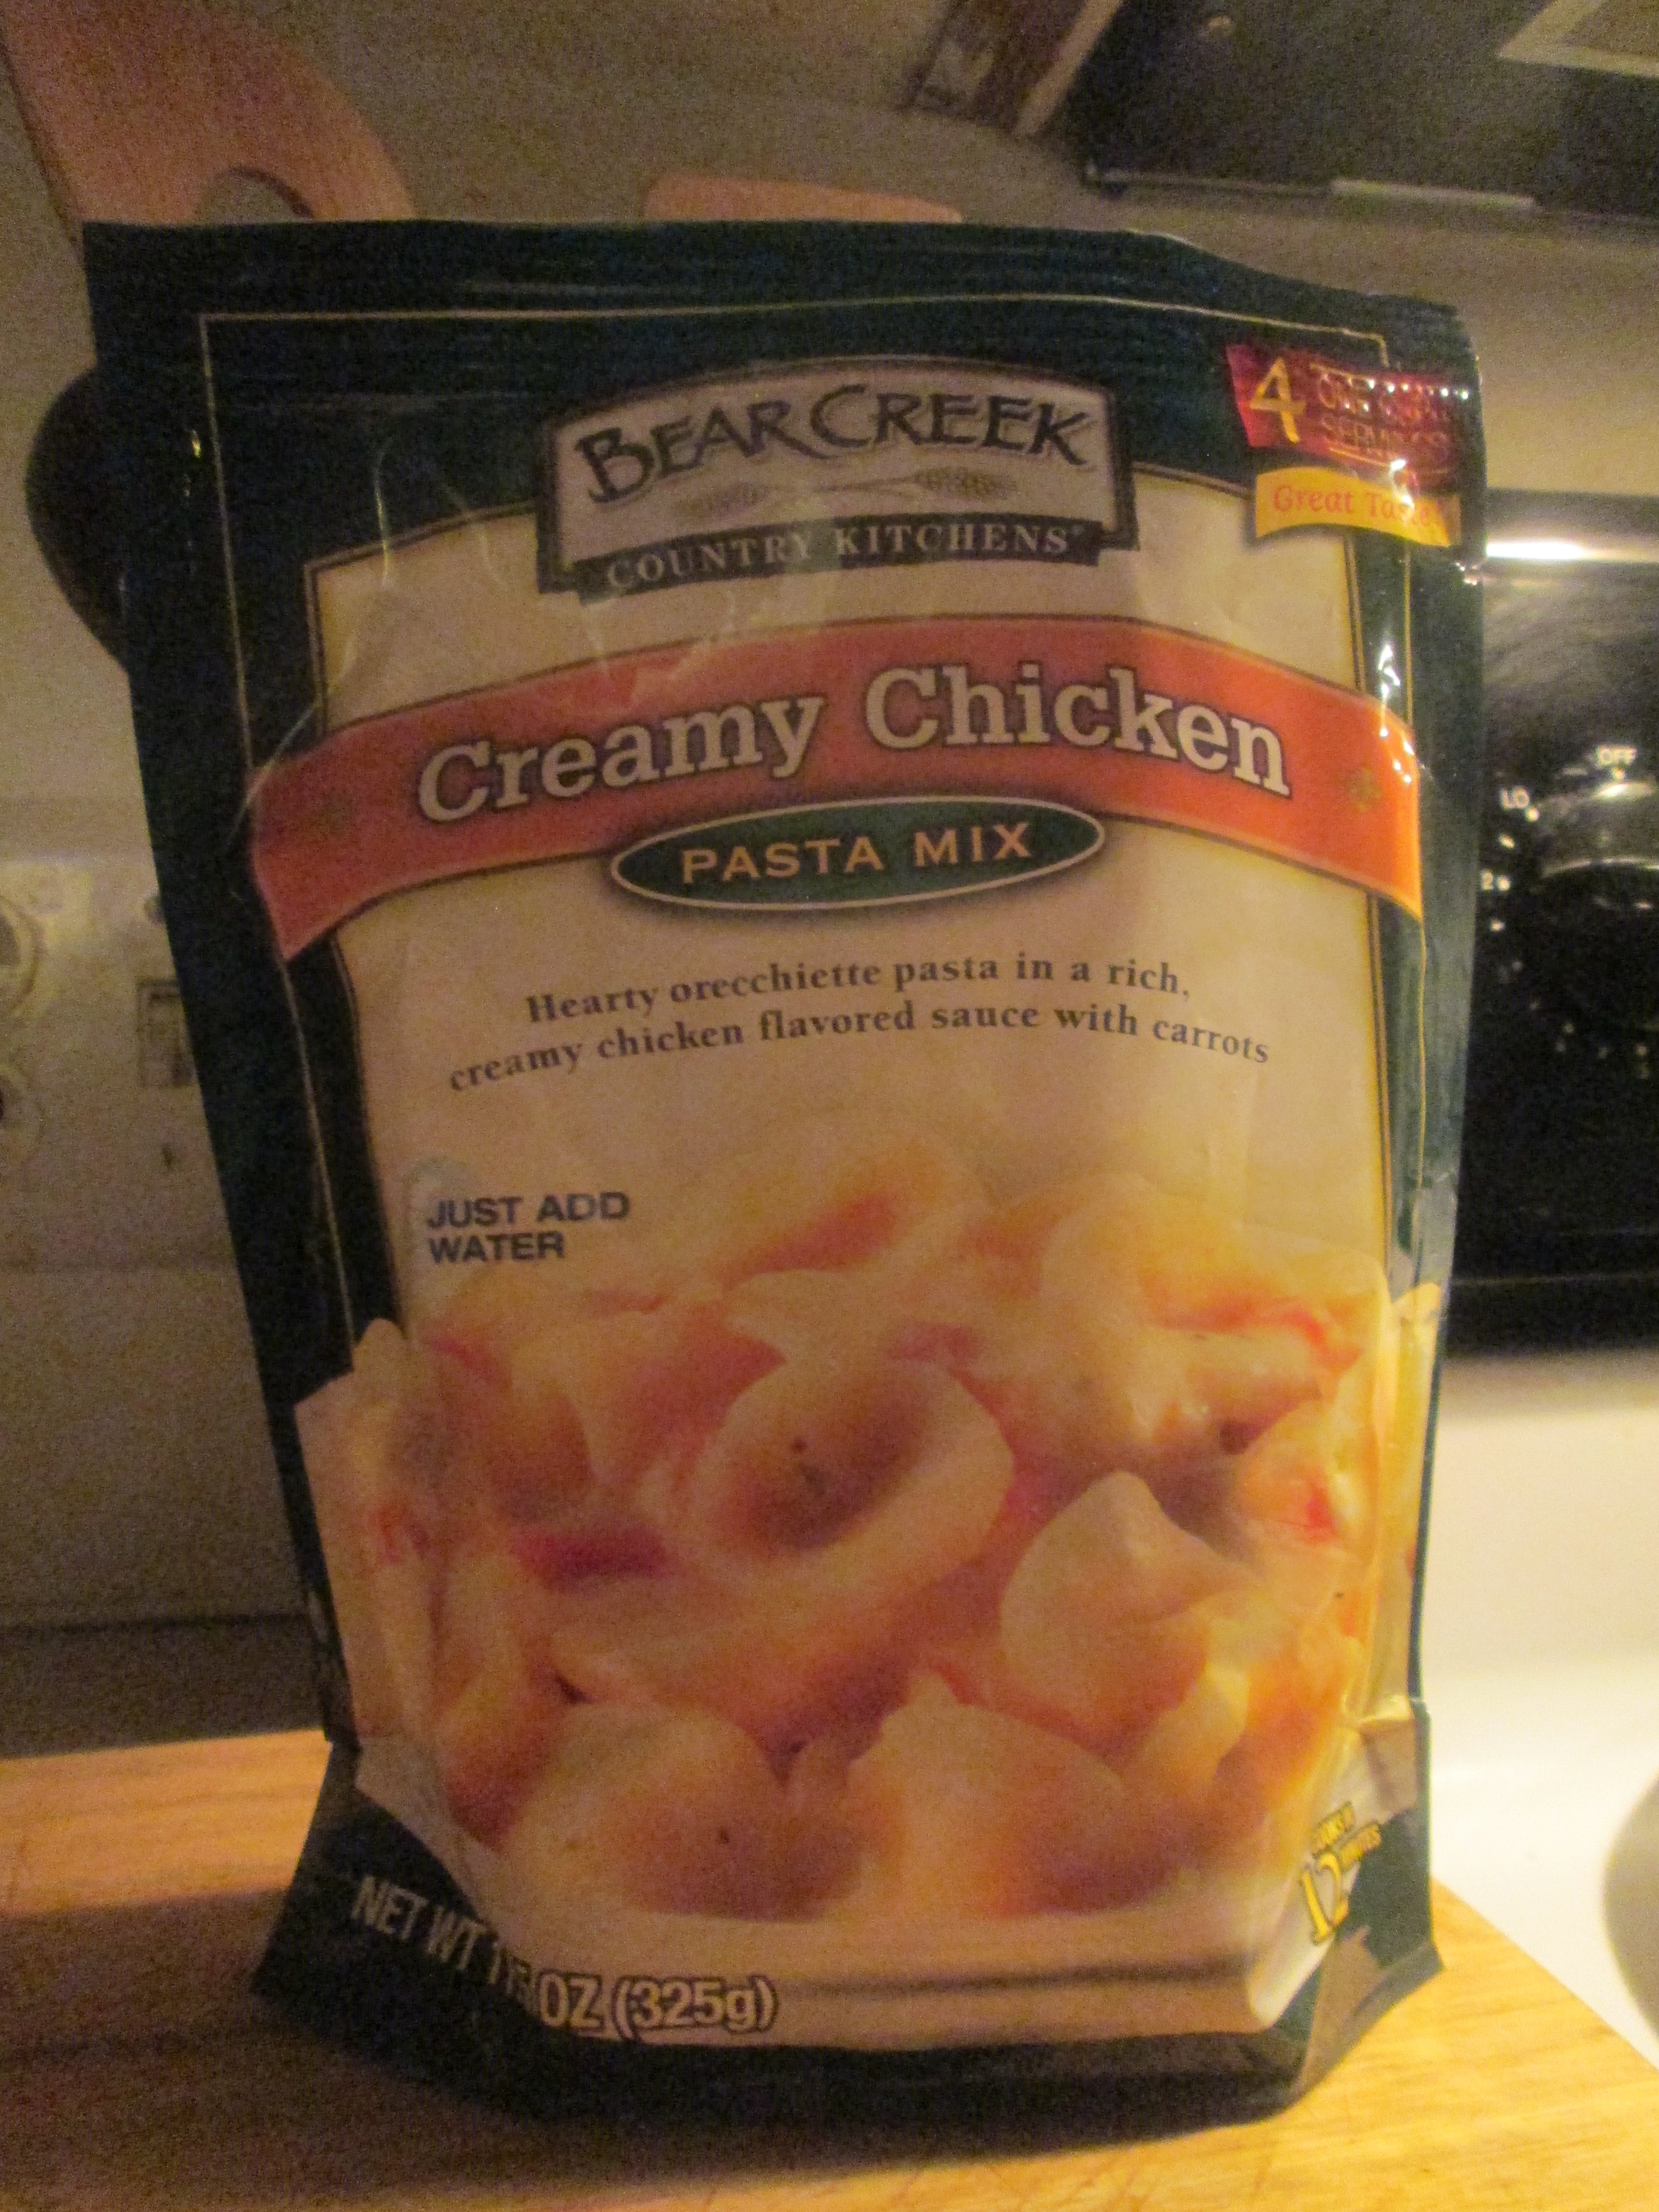 Bear Creek Country Kitchens Creamy Chicken Pasta Mix 004 My